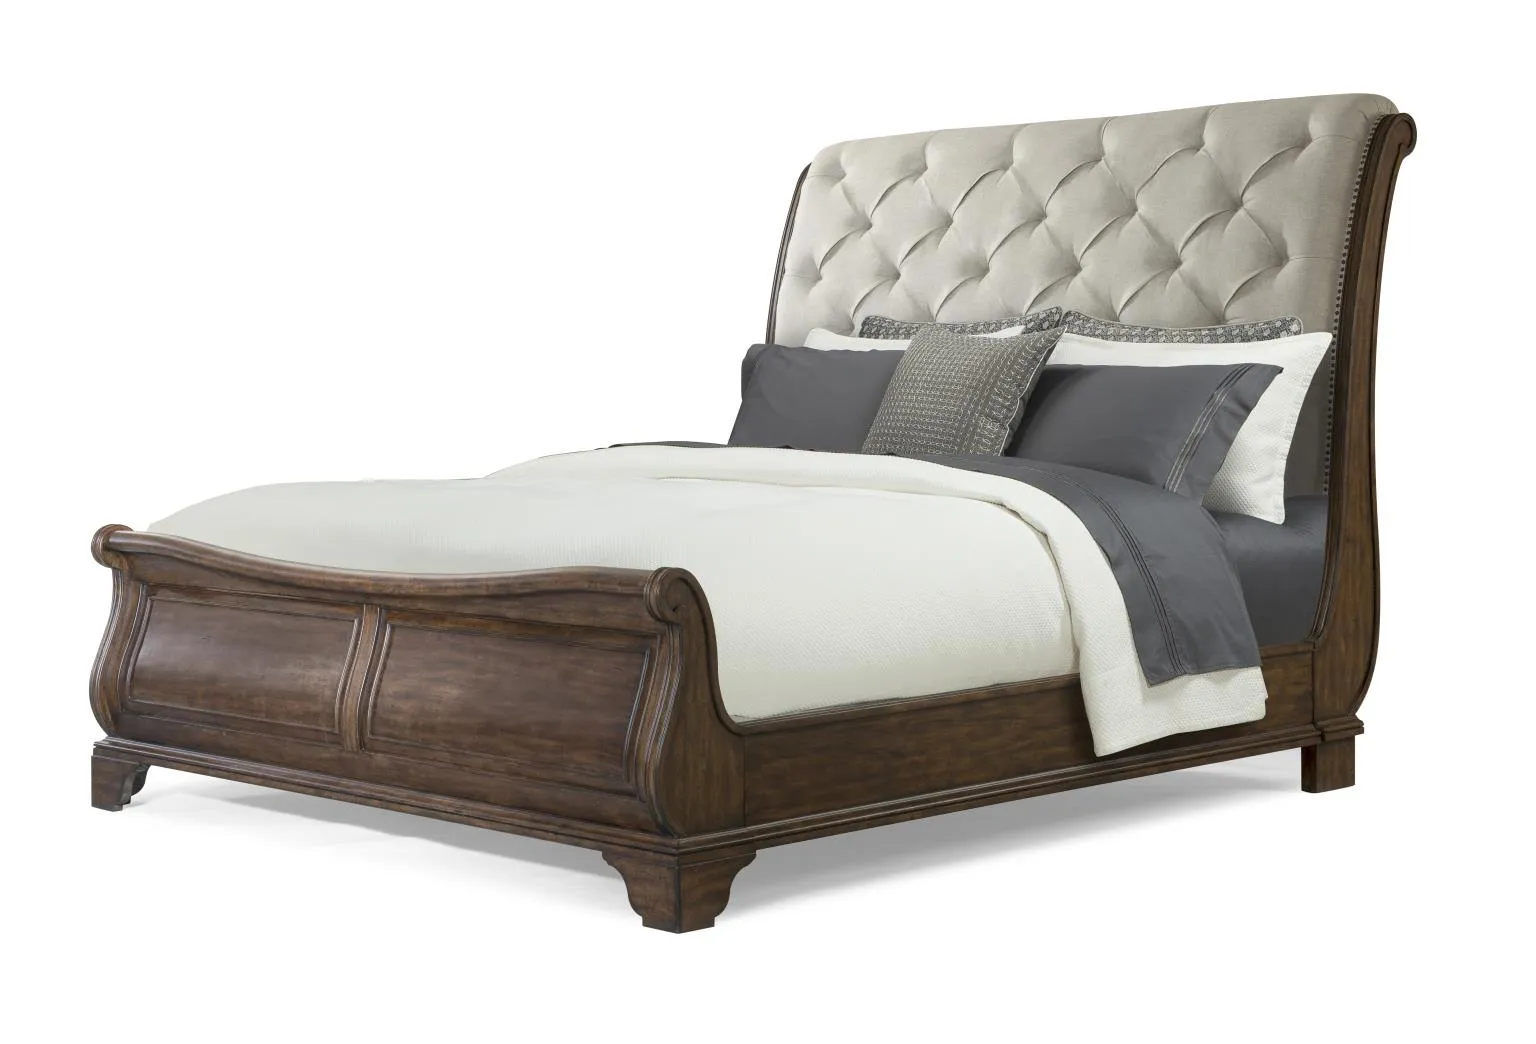 Trisha Yearwood Dottie Upholstered King Sleigh Bed